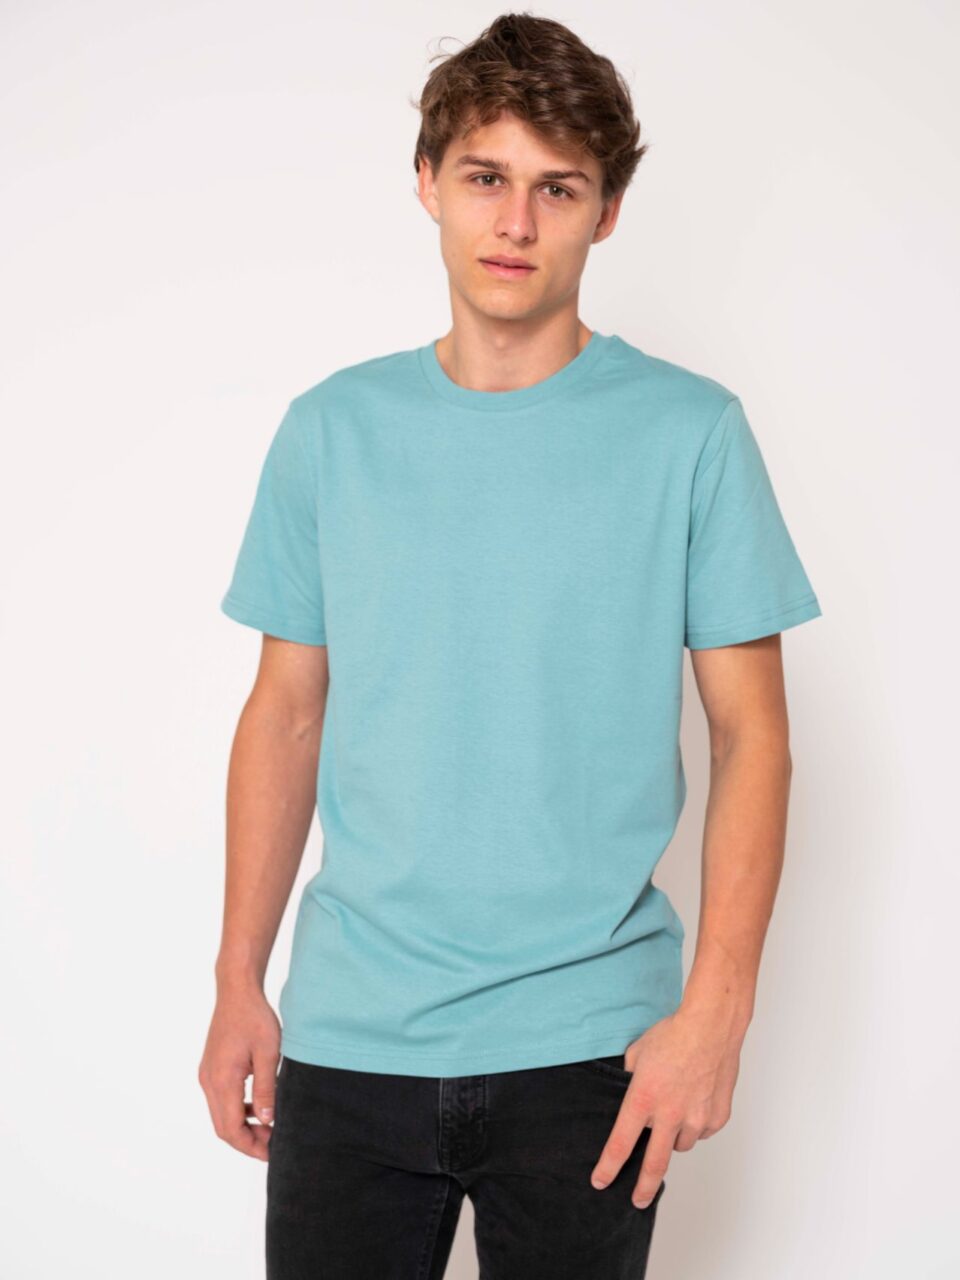 STROM_Turquoise_Shirt